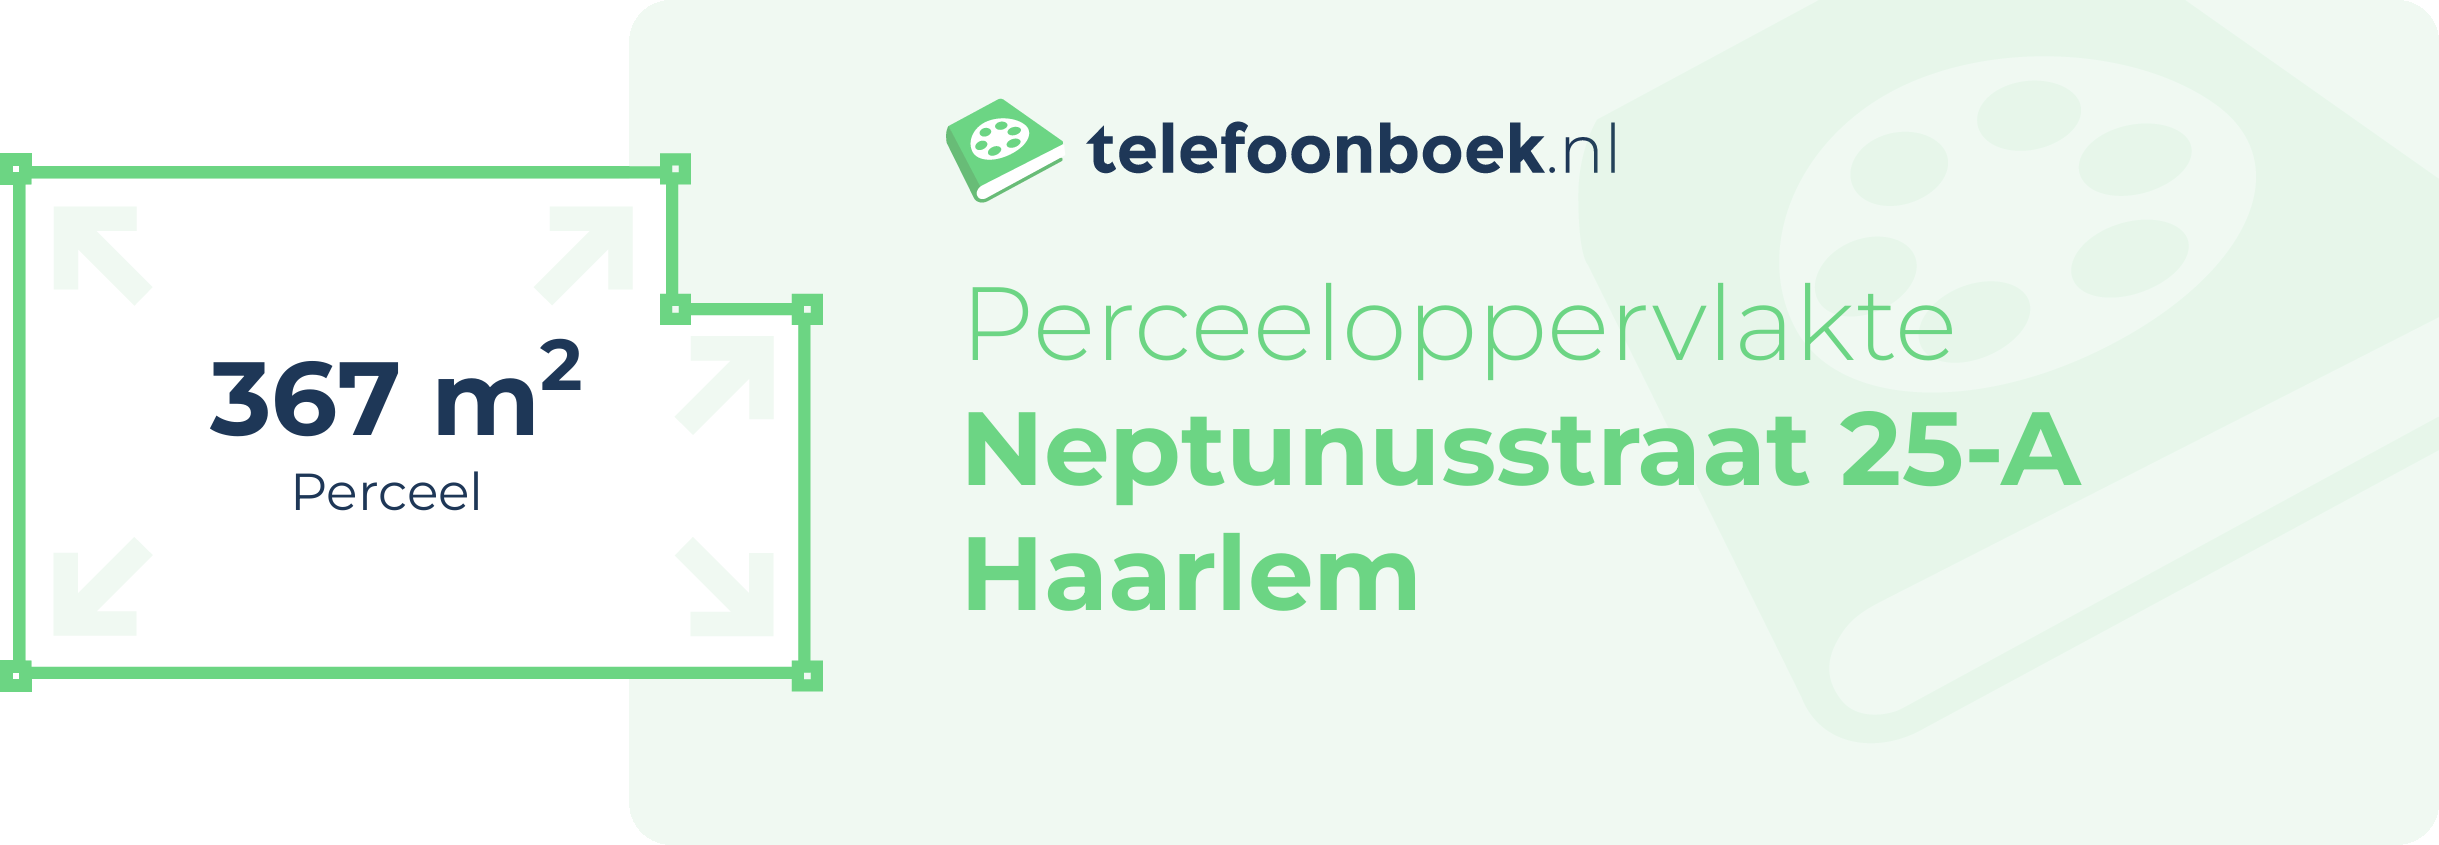 Perceeloppervlakte Neptunusstraat 25-A Haarlem